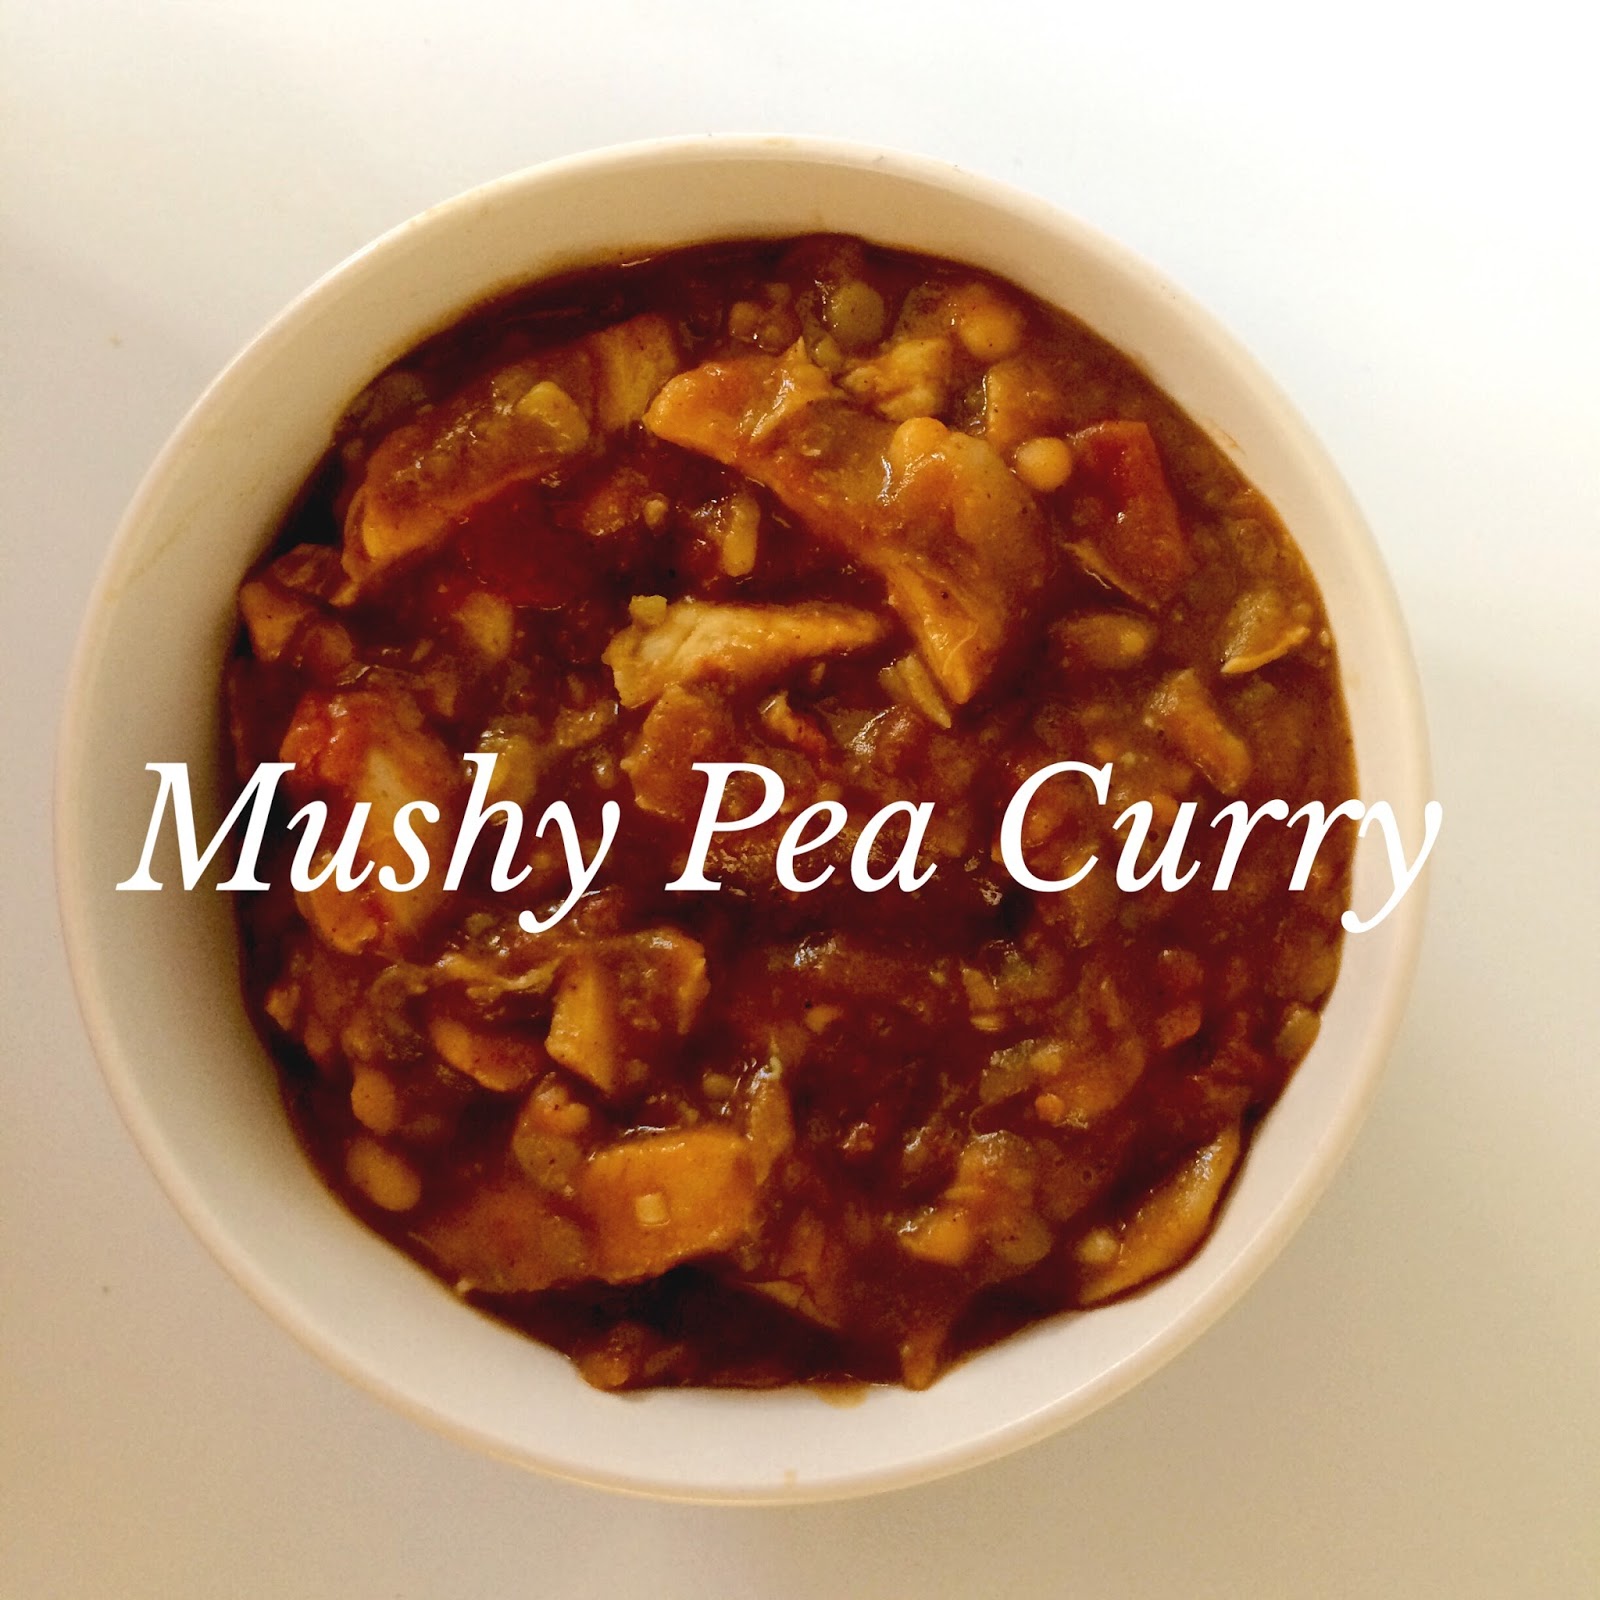 Slimming World Mushy Pea Curry Recipe Newcastle Family Life